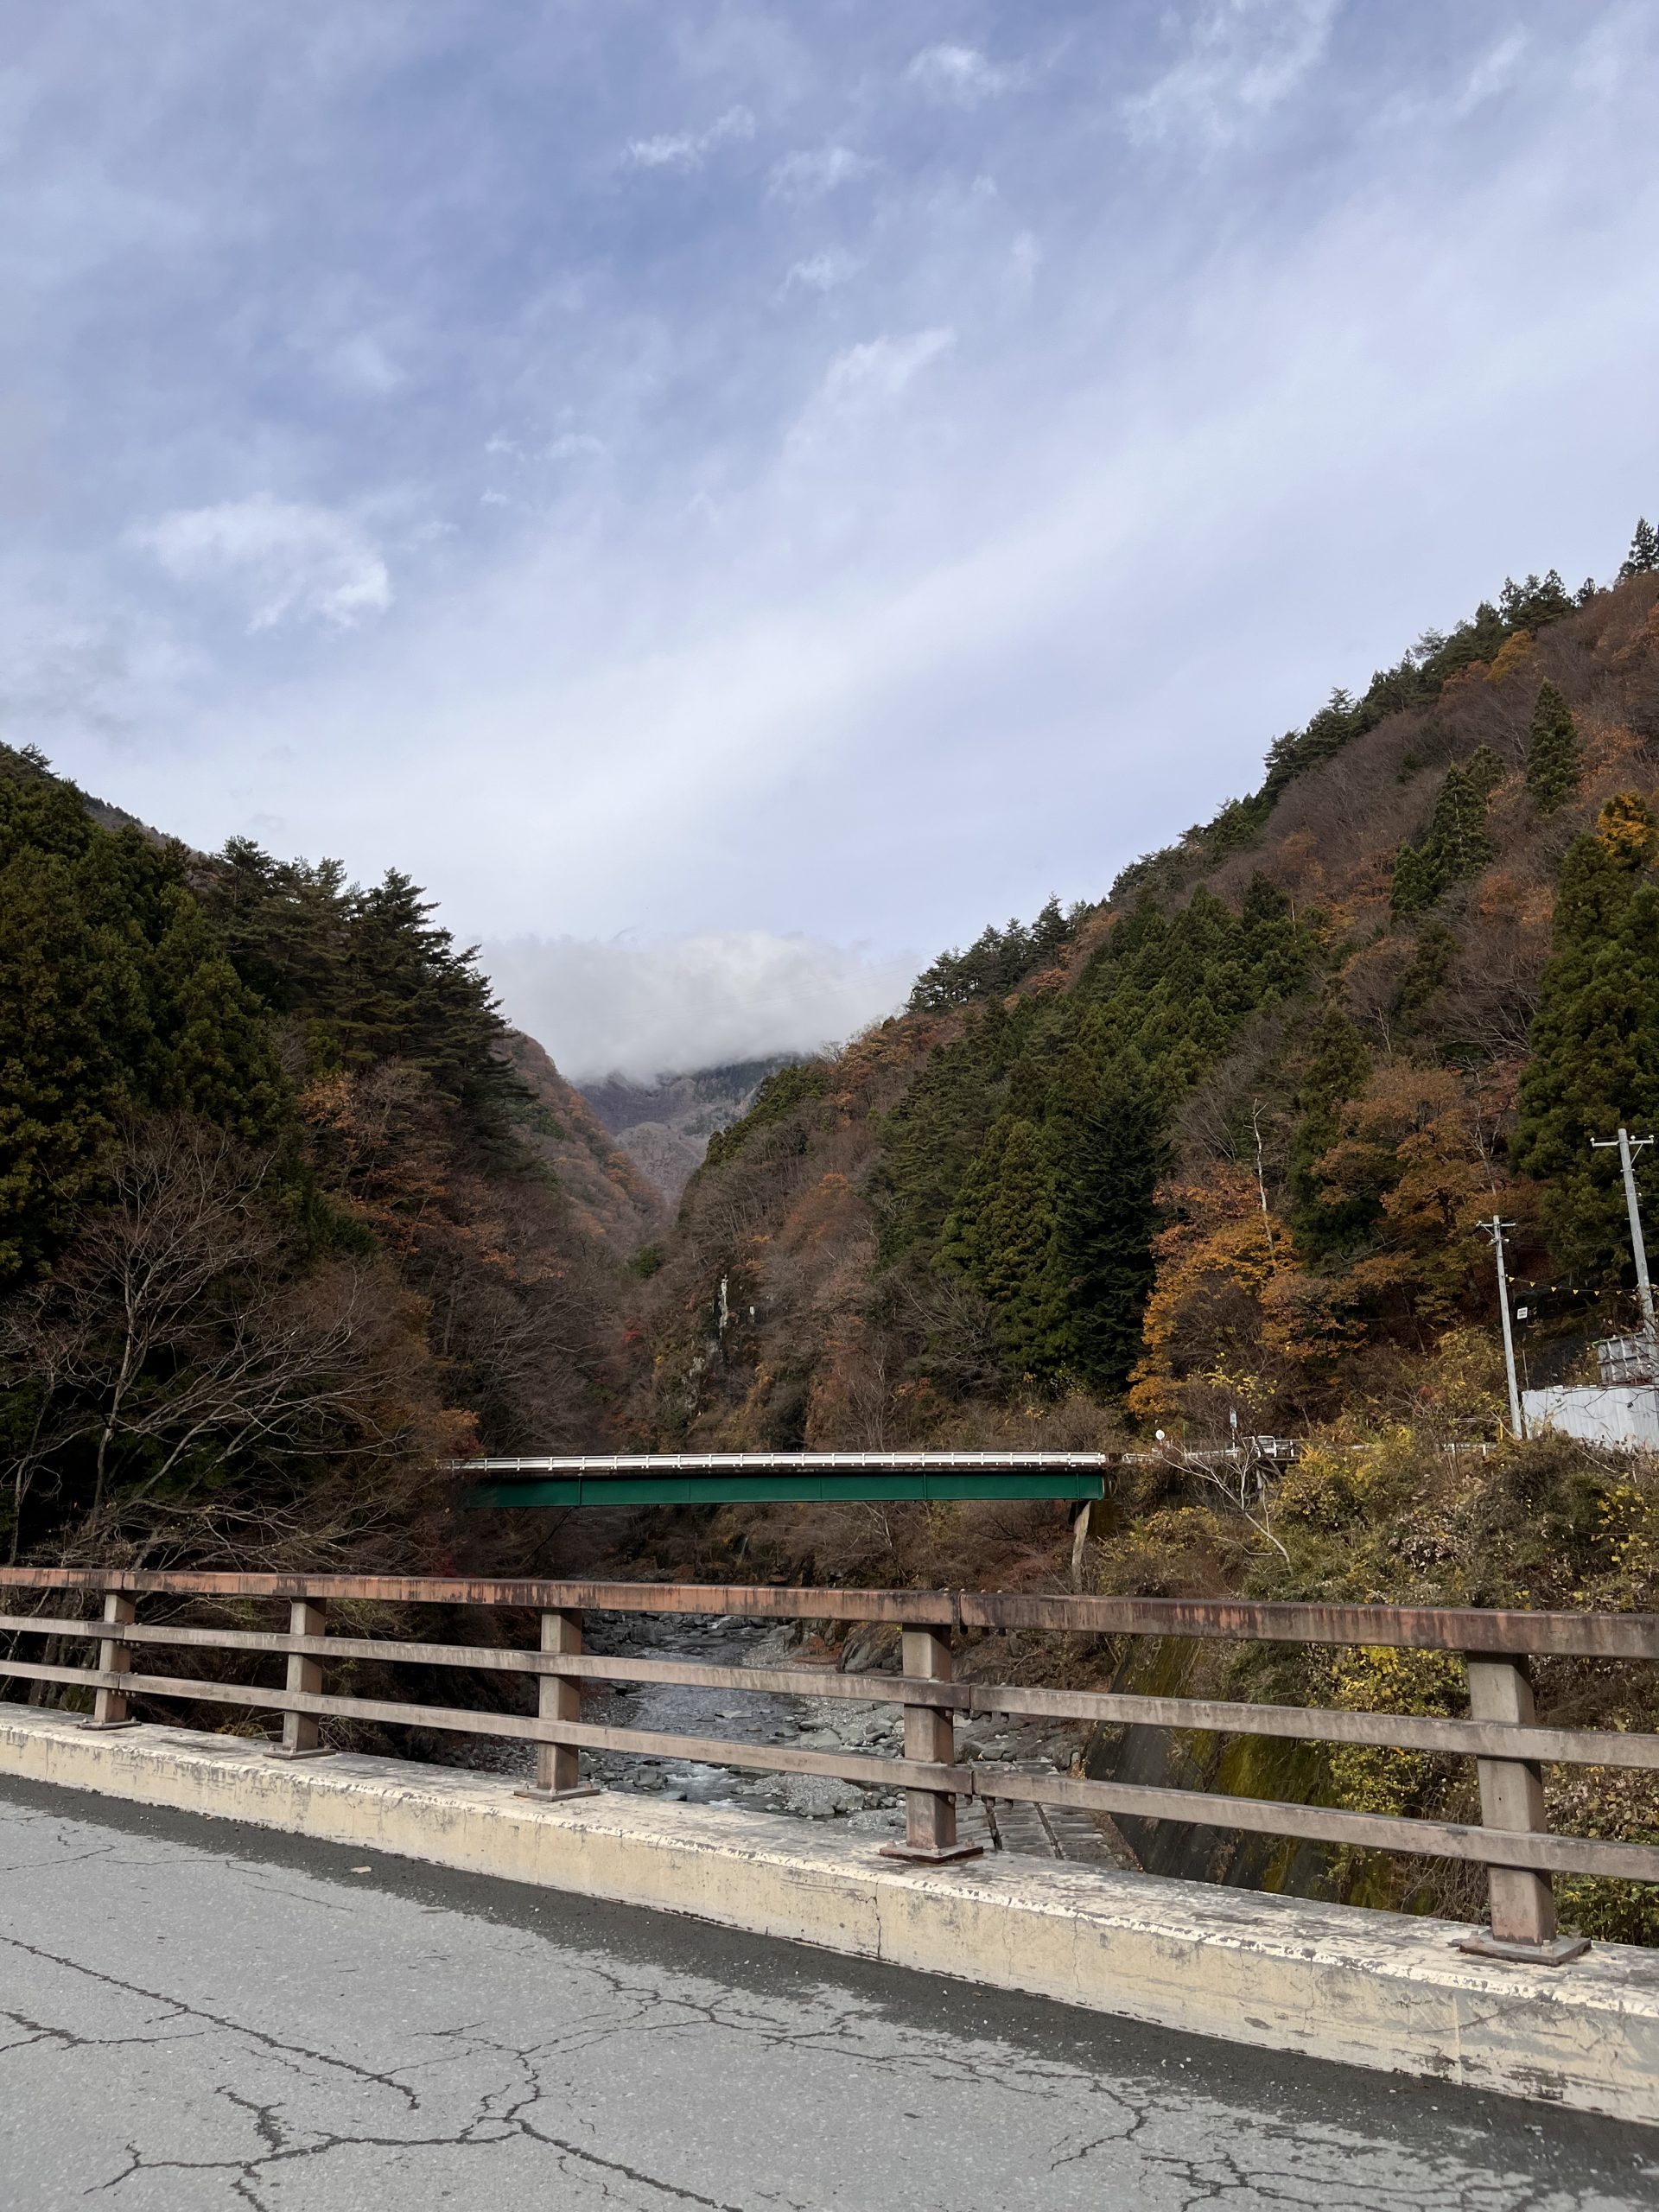 Driving in rural Japan - roads and views in rural Japan